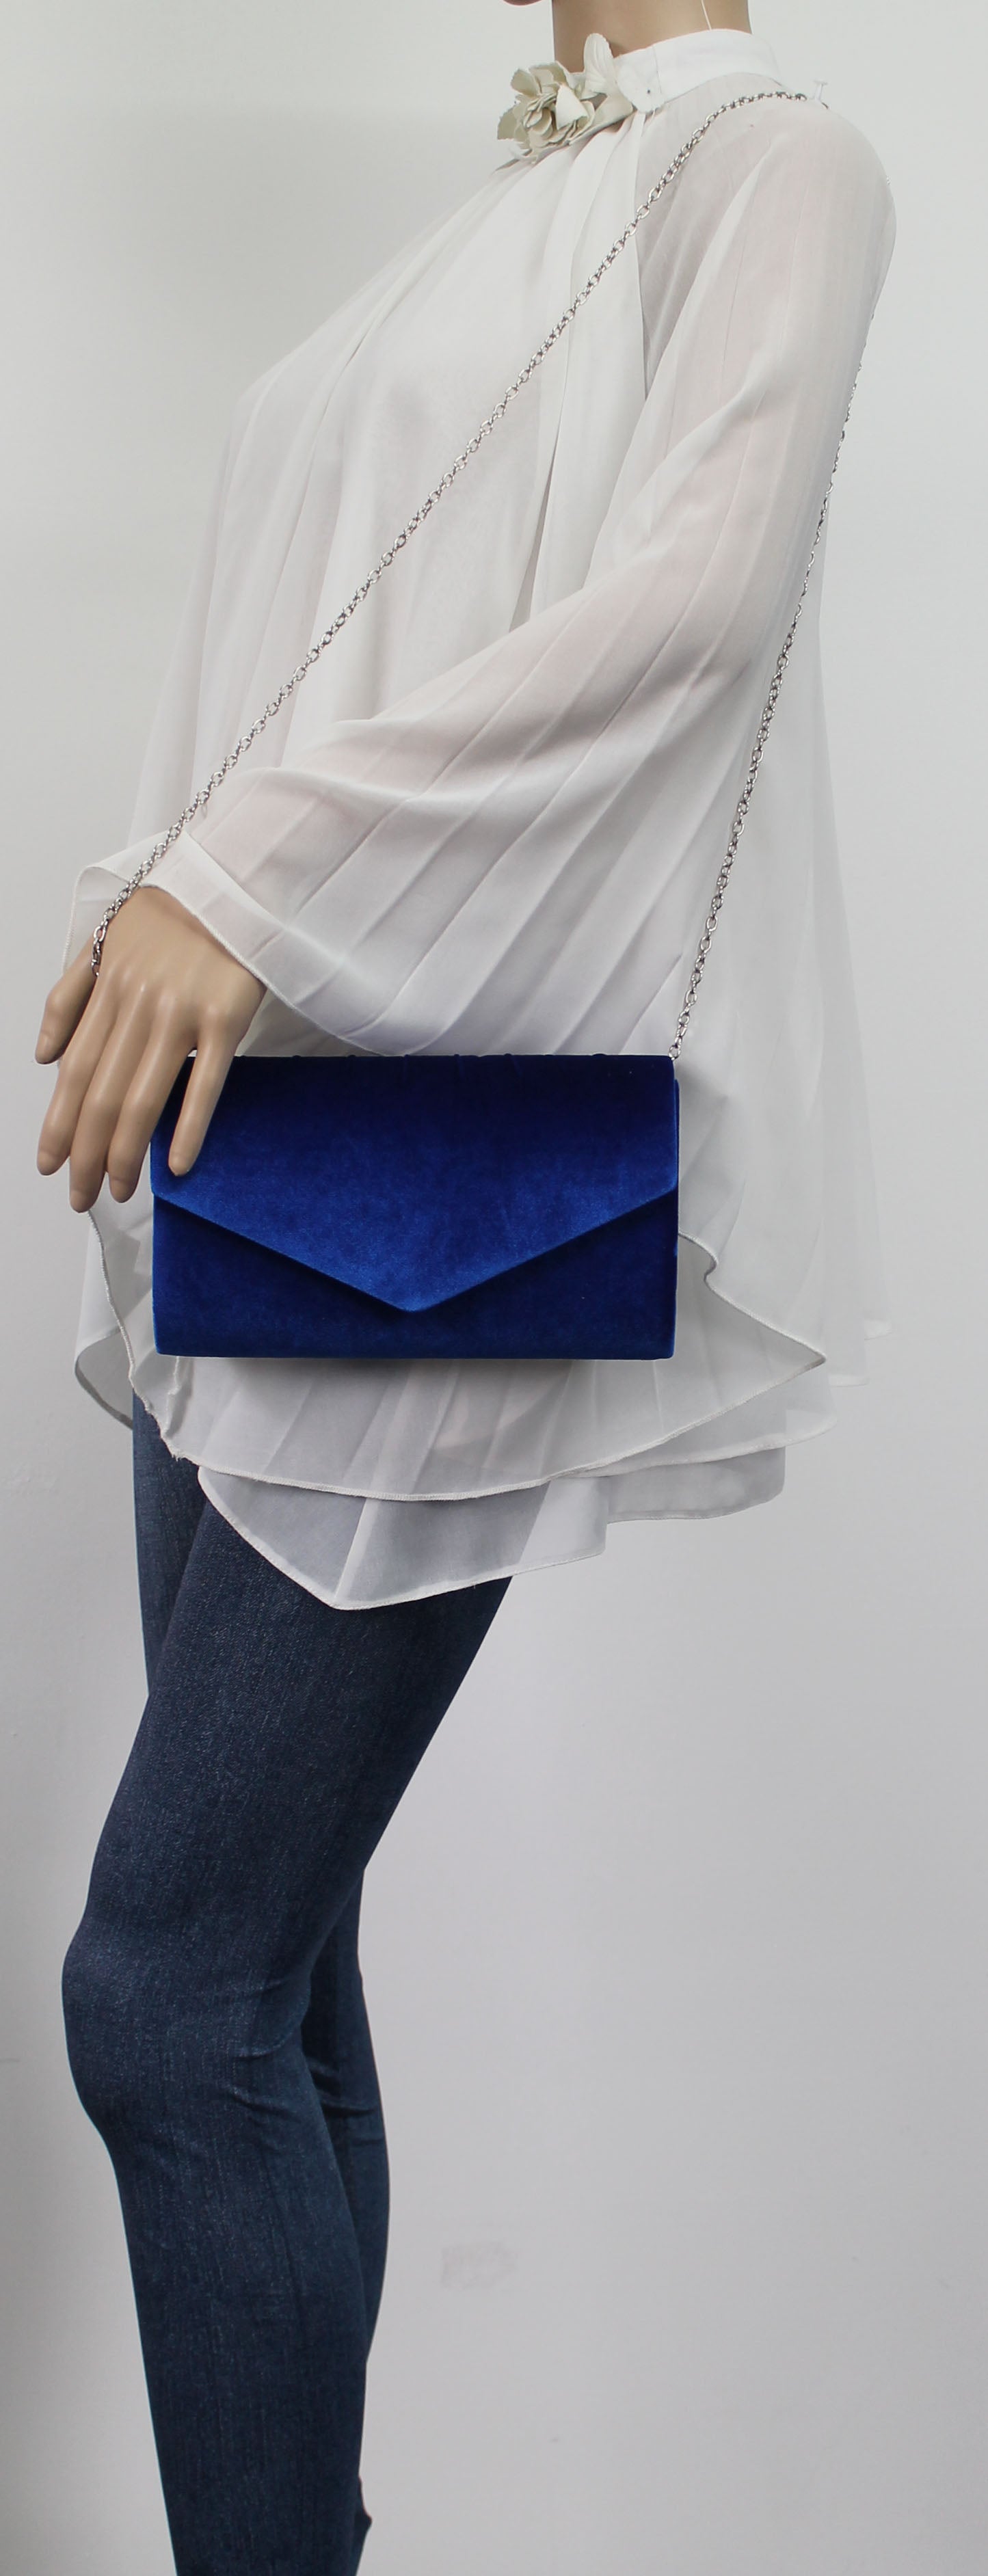 SWANKYSWANS Jess Clutch Bag Royal Blue Cute Cheap Clutch Bag For Weddings School and Work